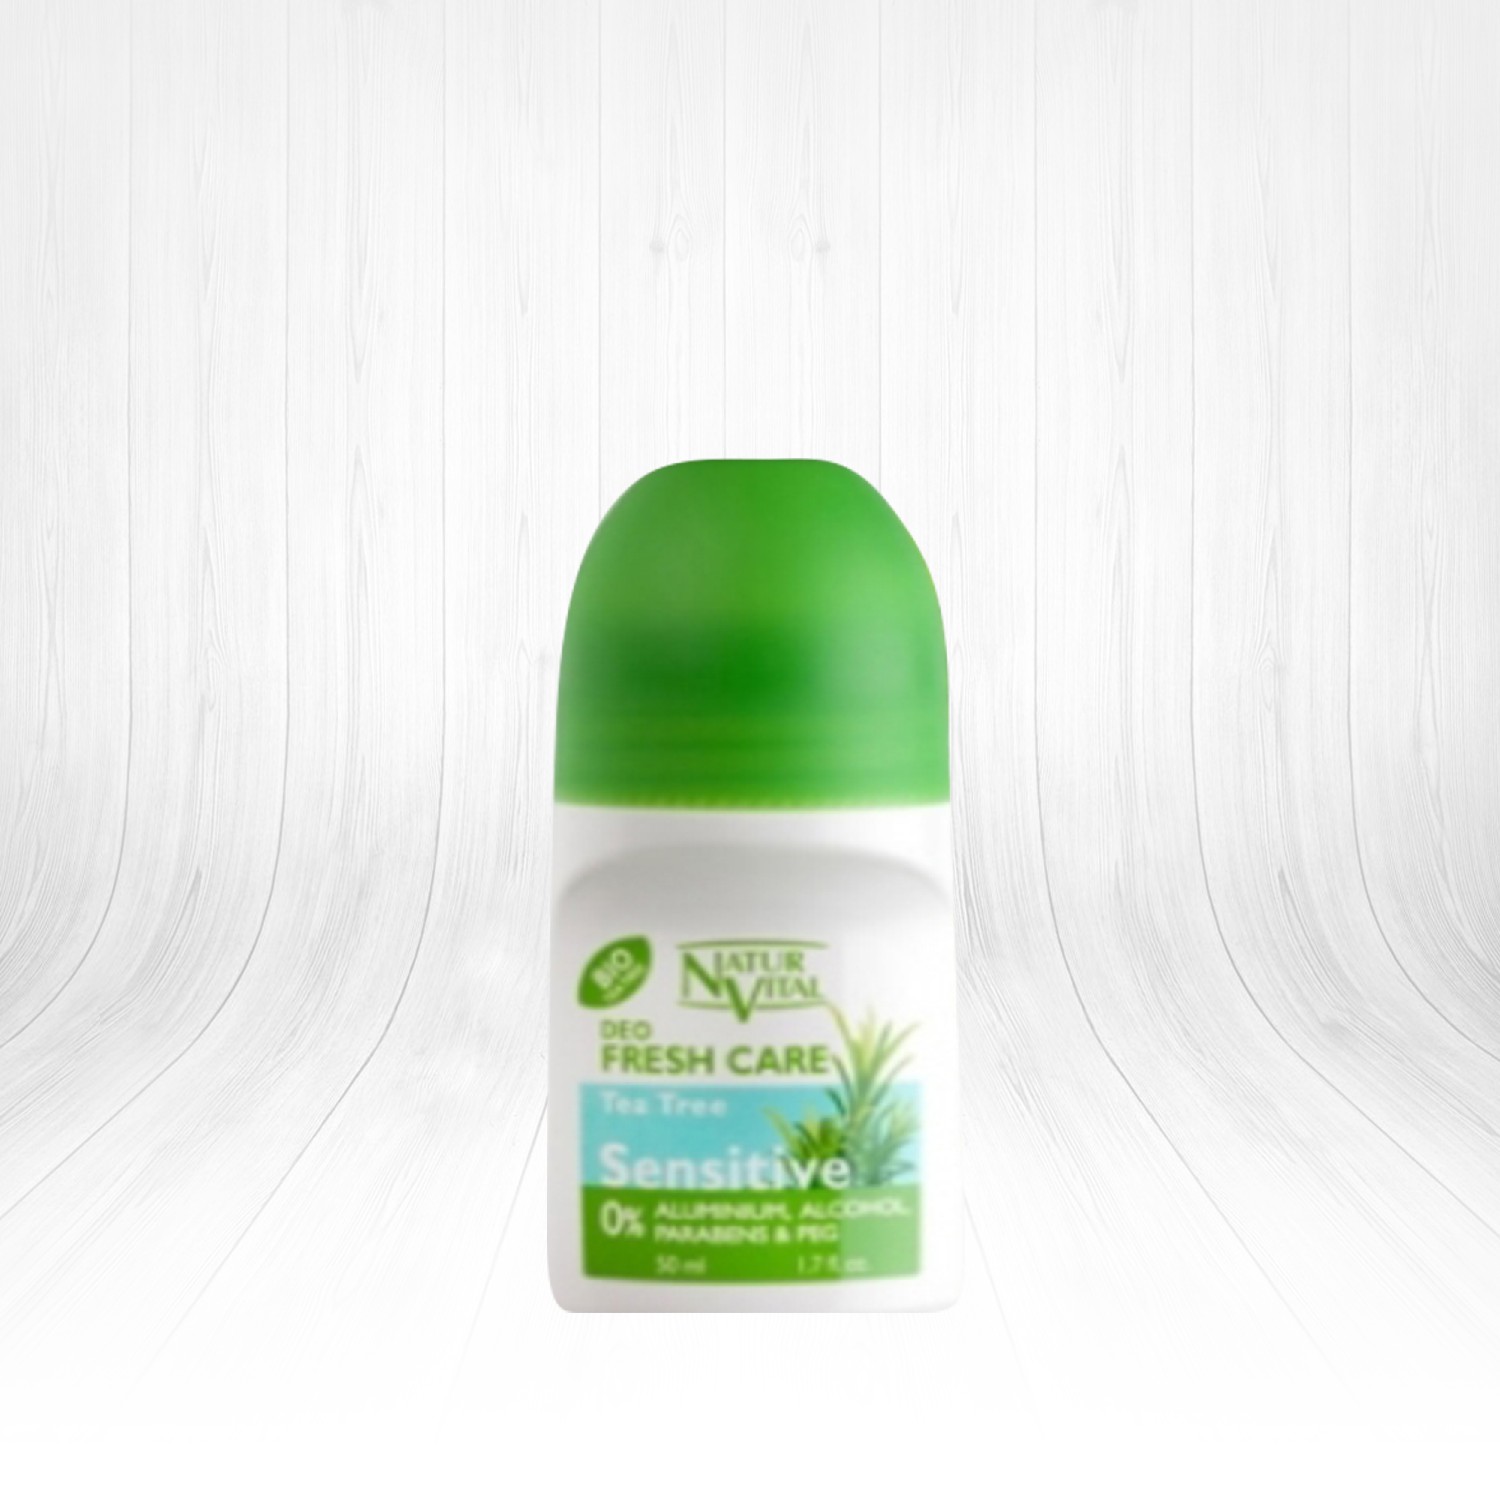 Natur Vital Sensitive Fresh Care RollOn Deodorant